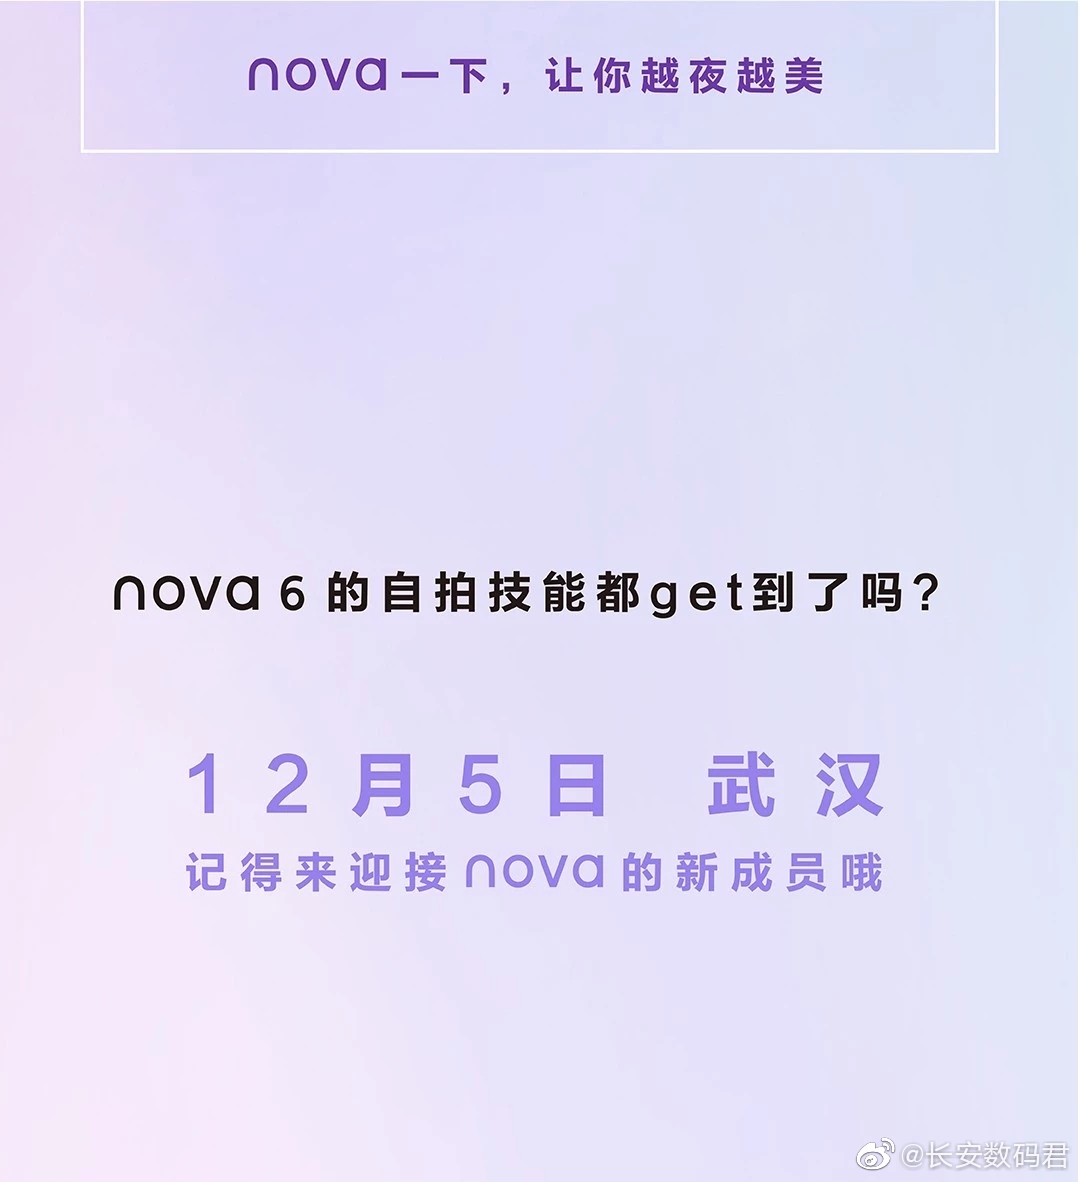 Huawei Nova 6 5G, co wiadomo na jego temat